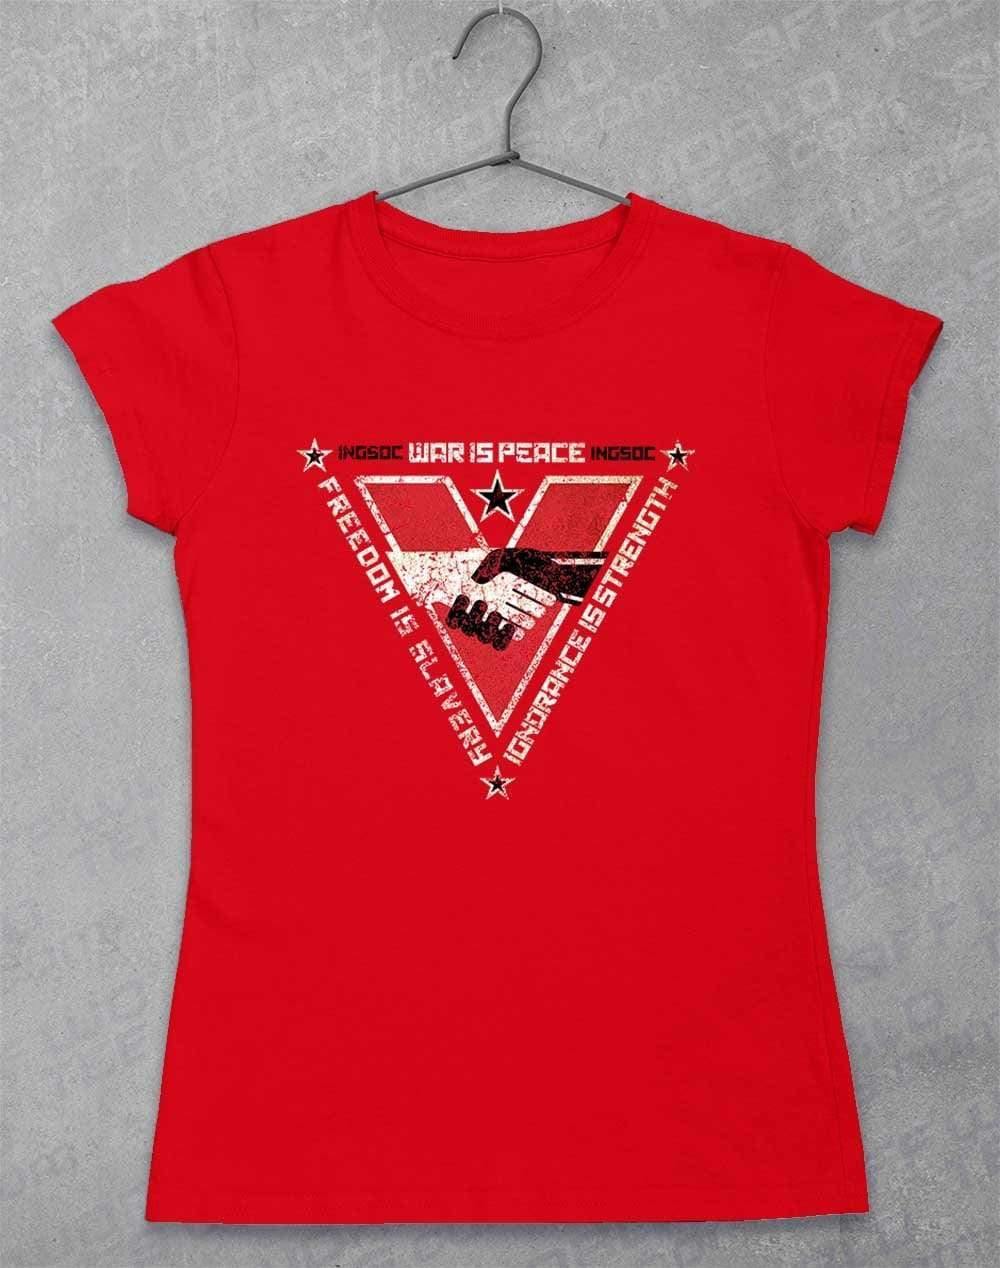 INGSOC Triangular Slogans Women's T-Shirt 8-10 / Red  - Off World Tees